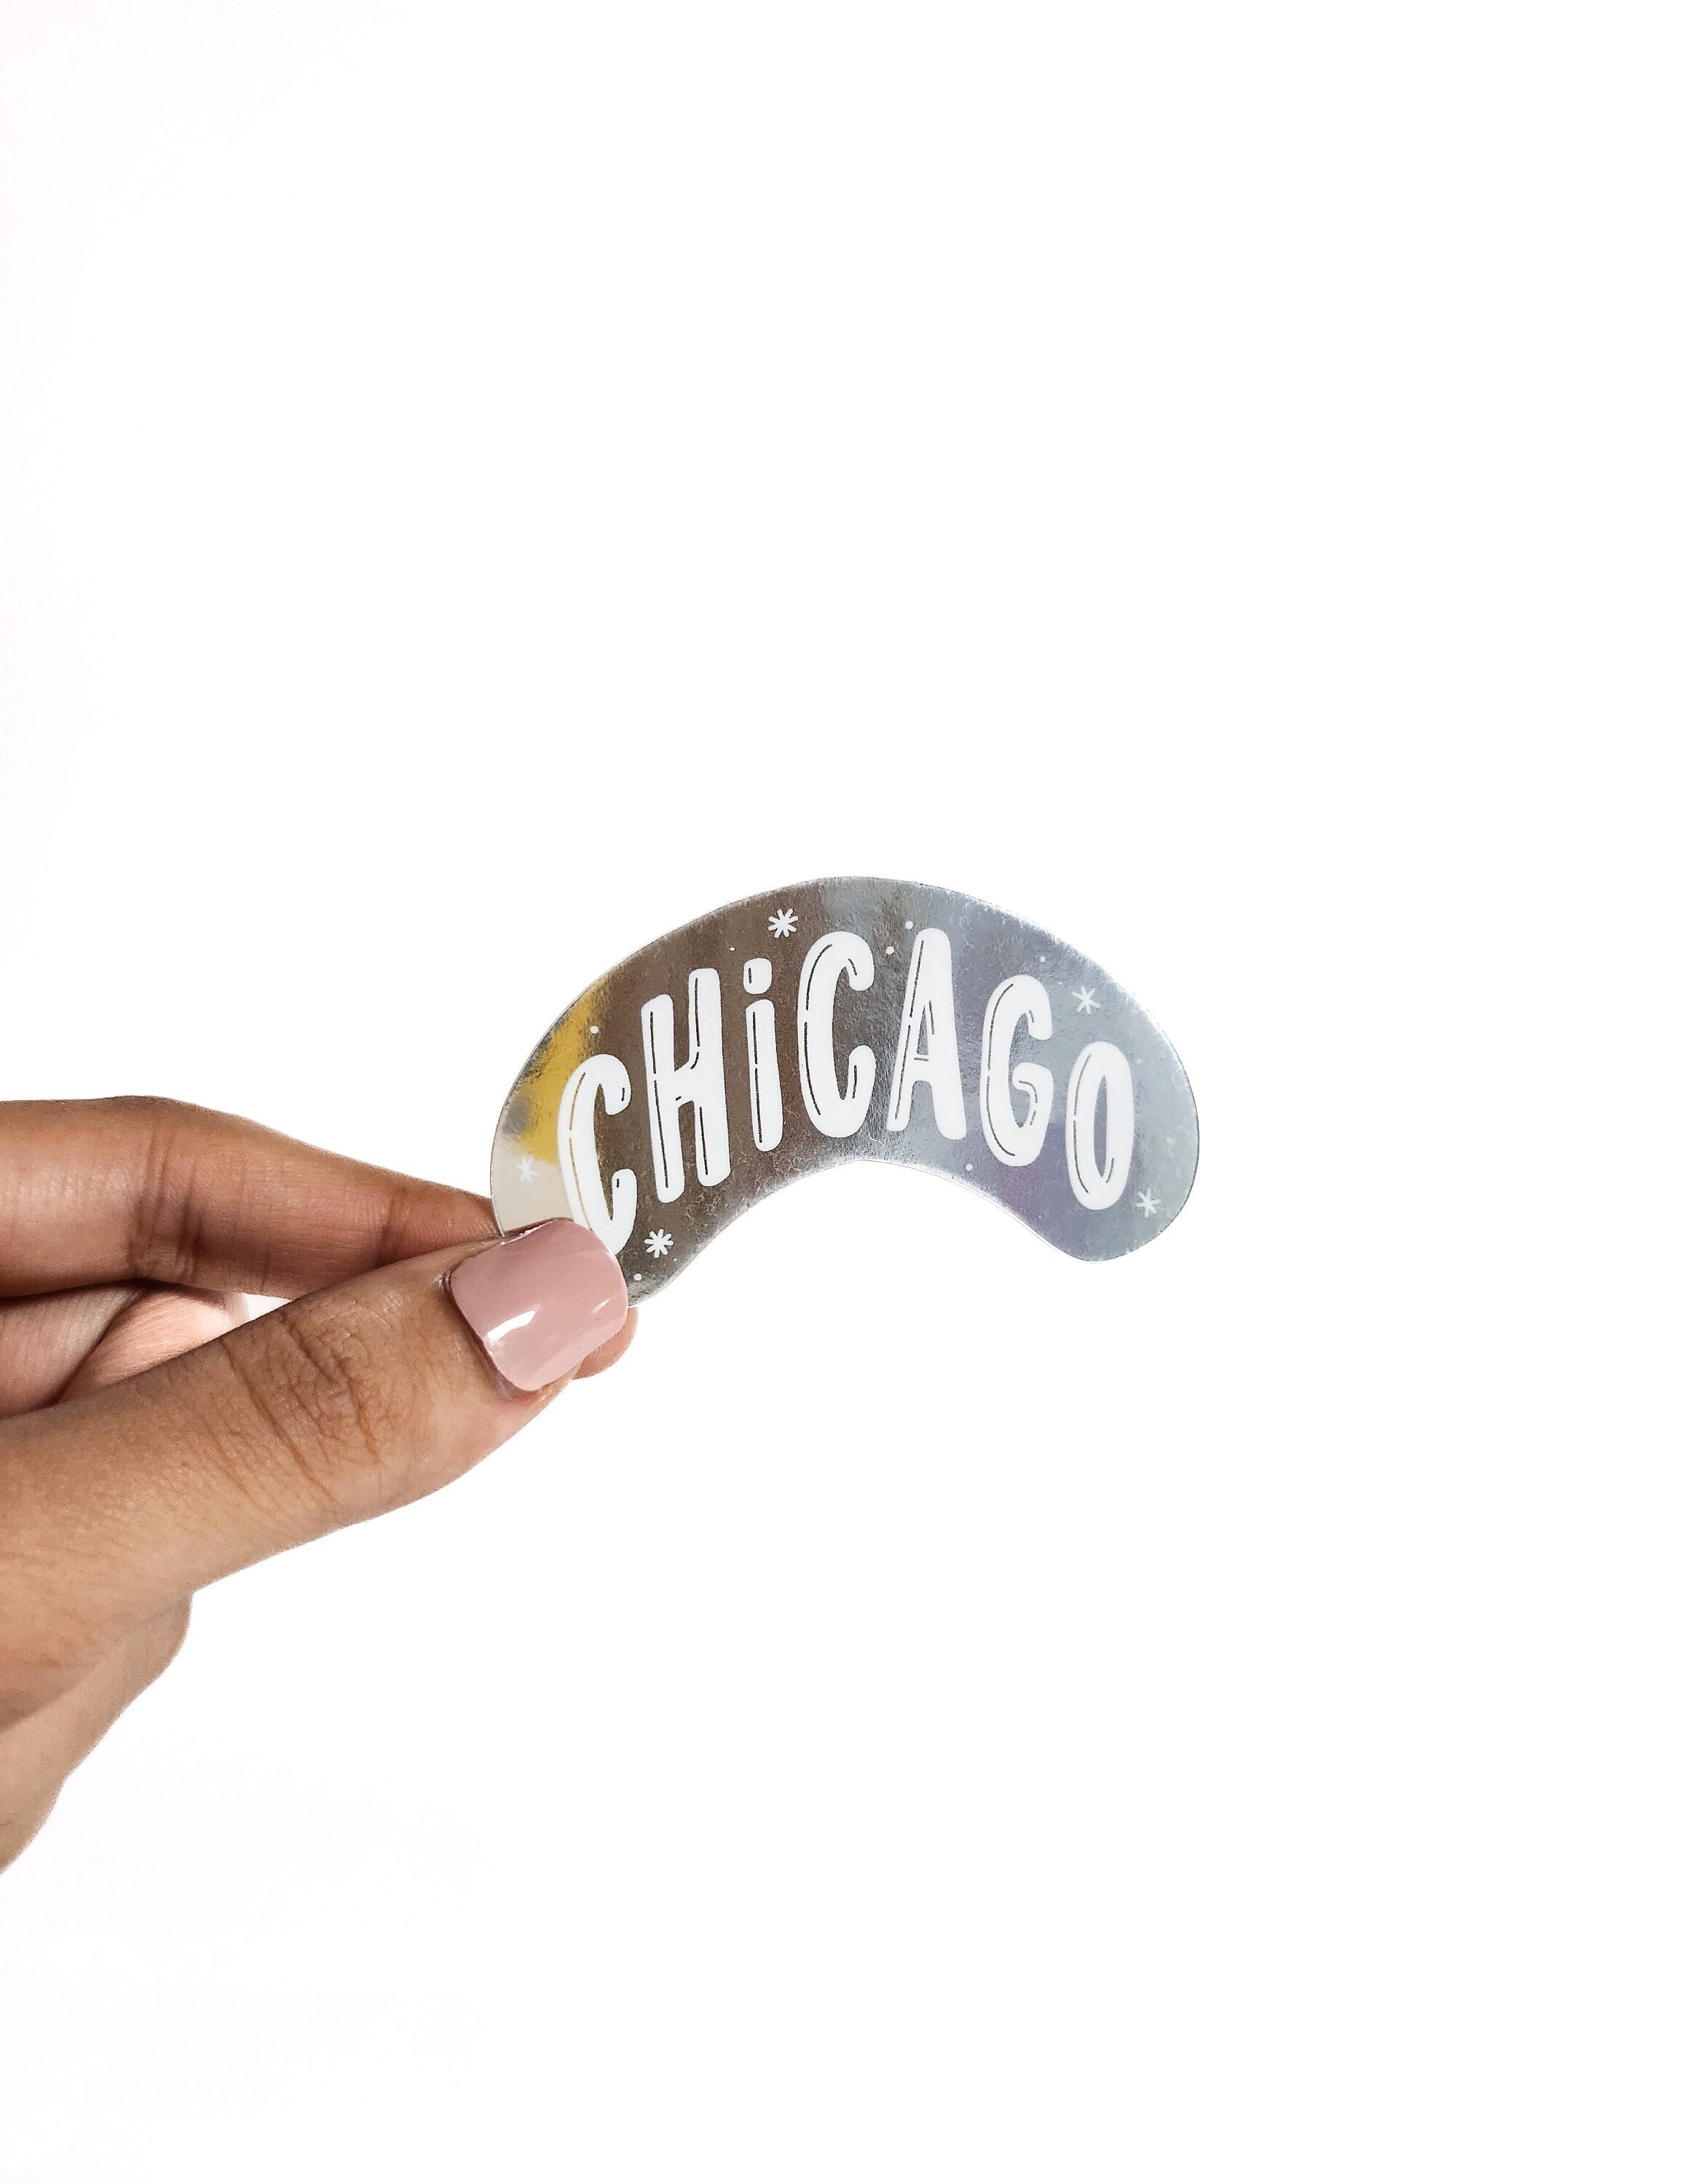 Chicago Oval Bean Metal Key Chain